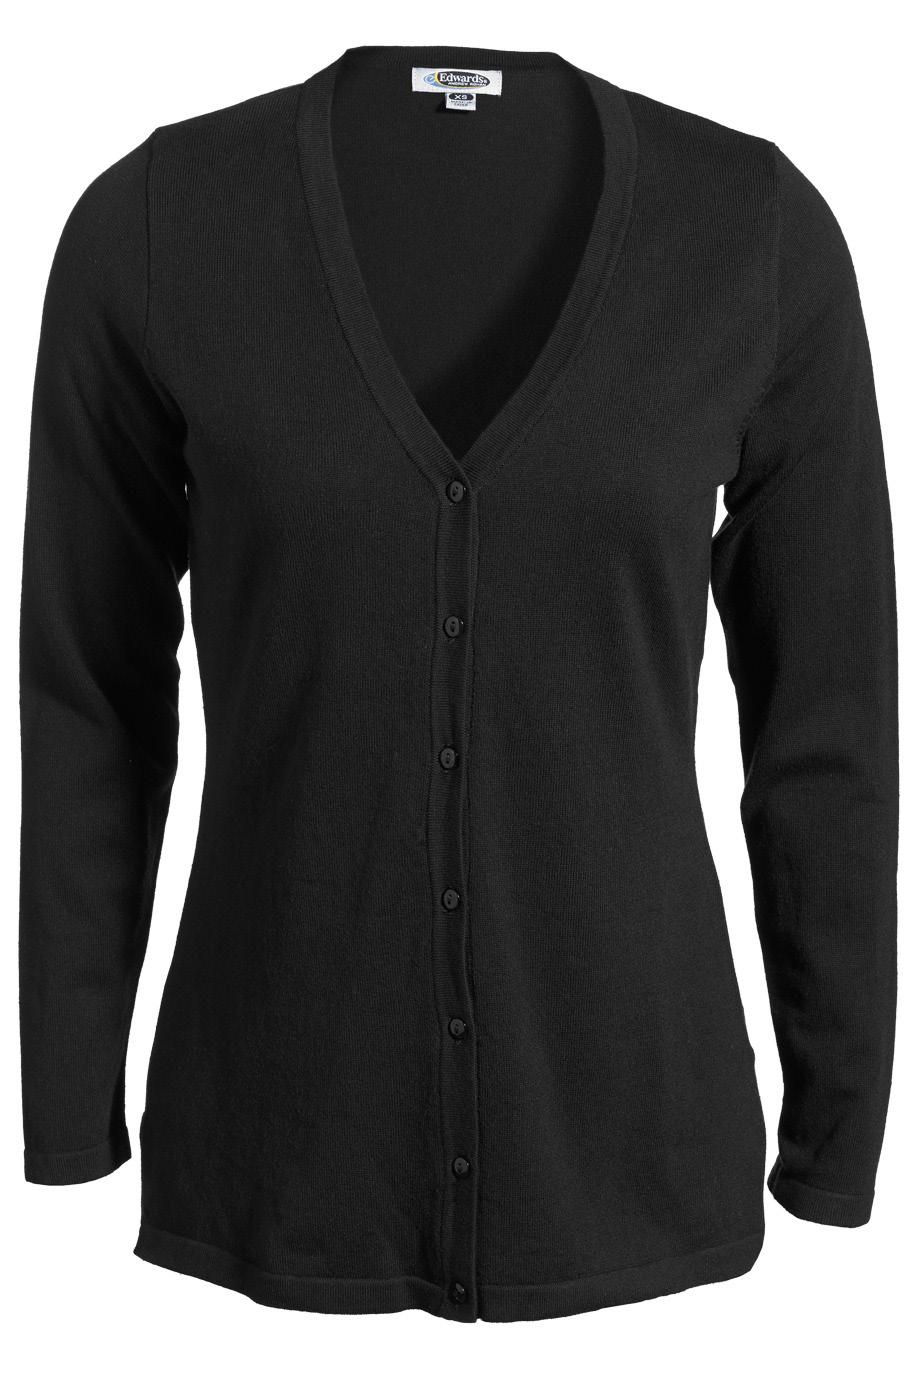 V-Neck Fine Gauge Long Cardigan Sweater Item #: 046 52% Cotton/31% Acrylic/17% Nylon Long fine gauge V-neck cardigan Narrow